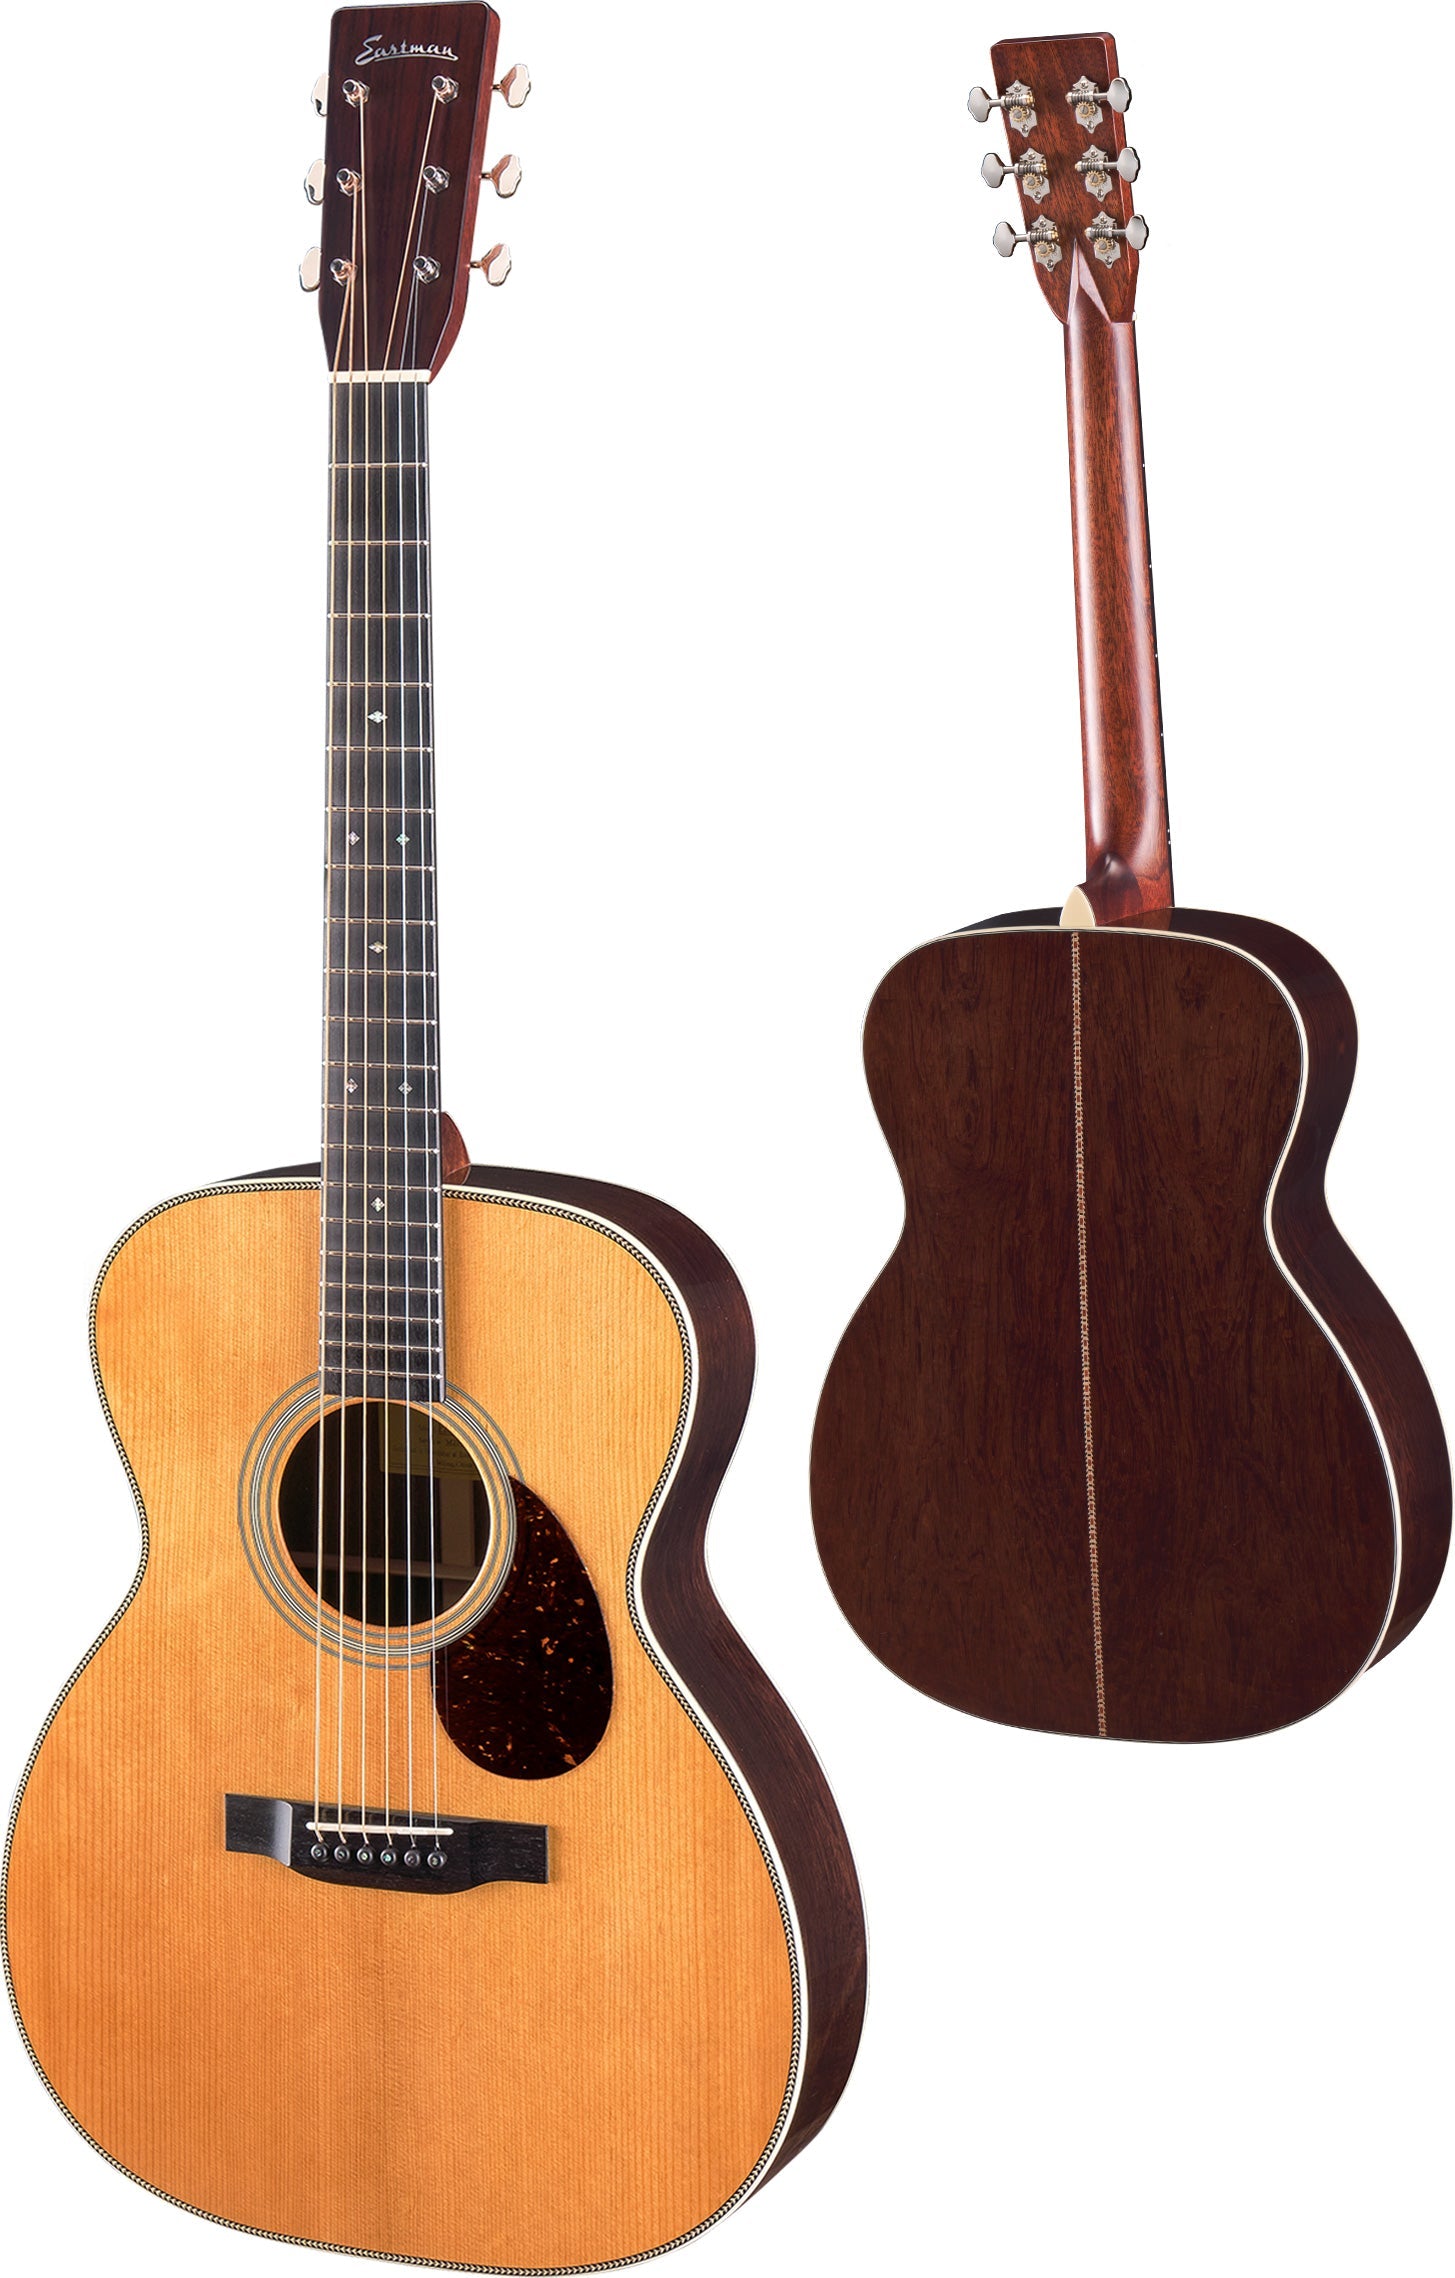 Eastman E20OM-MR-TC Madagascar Rosewood, Acoustic Guitar for sale at Richards Guitars.